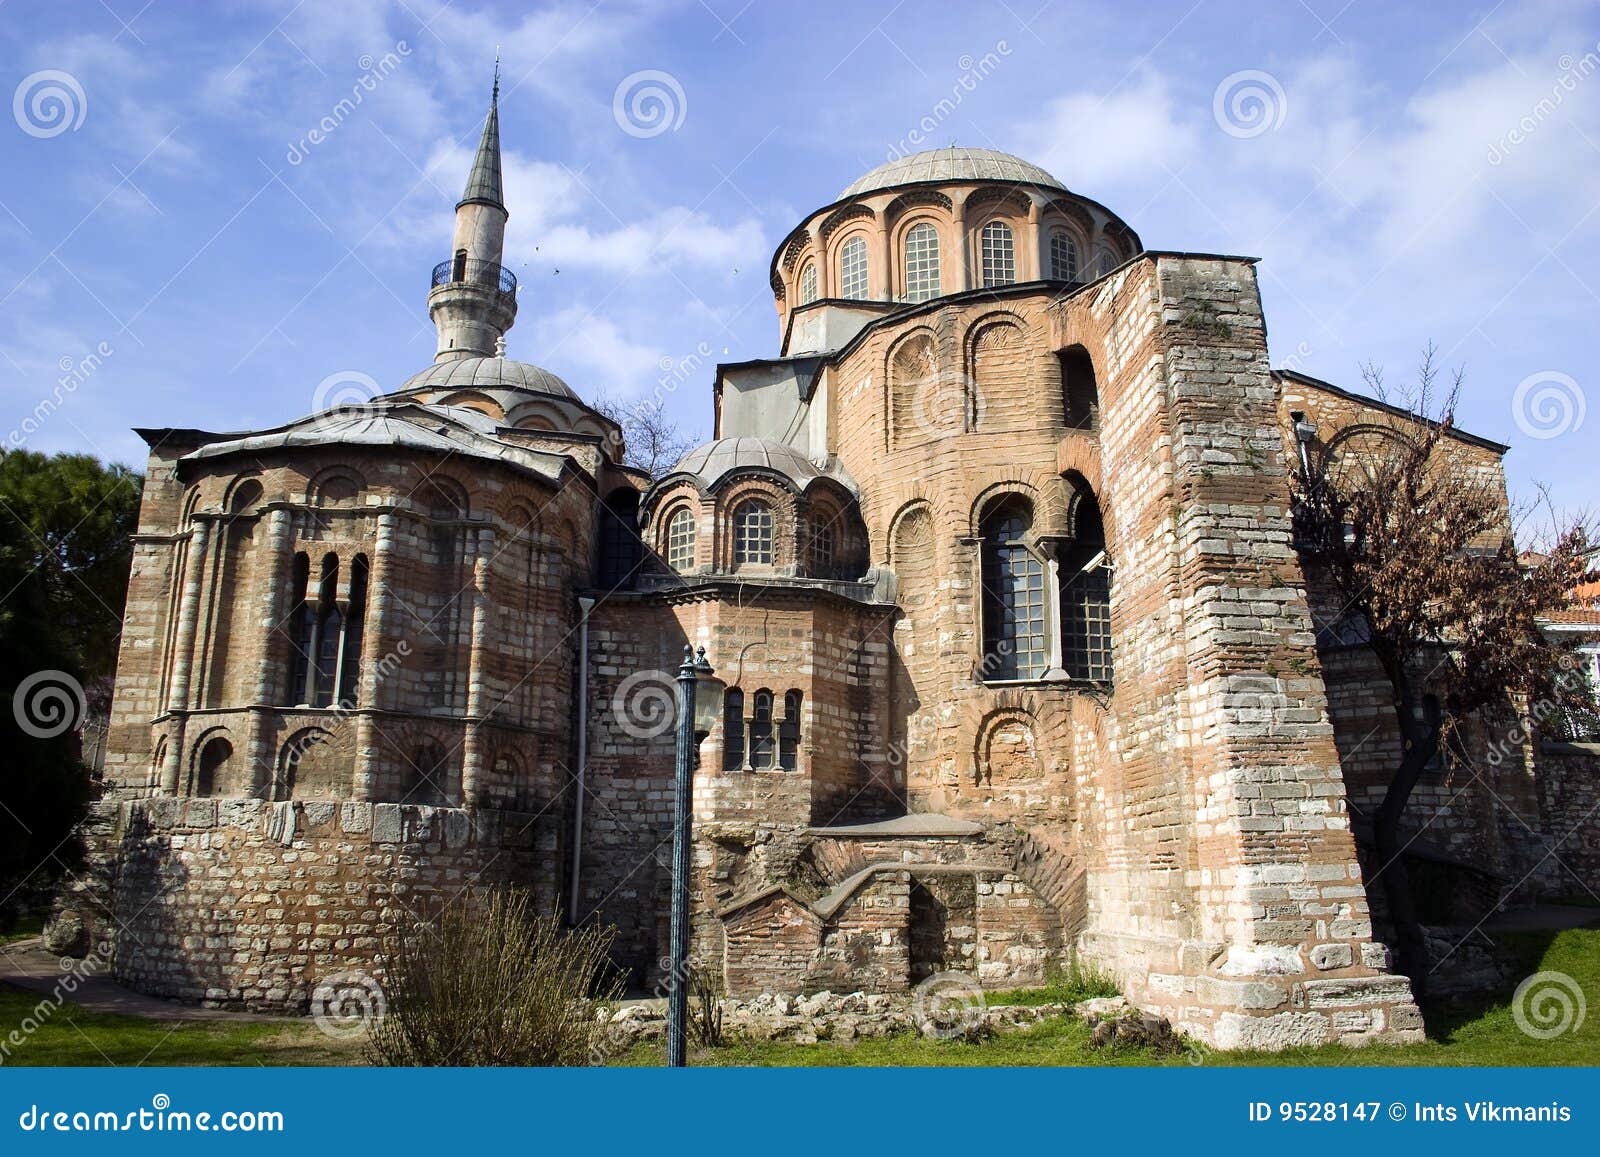 chora church in istanbul